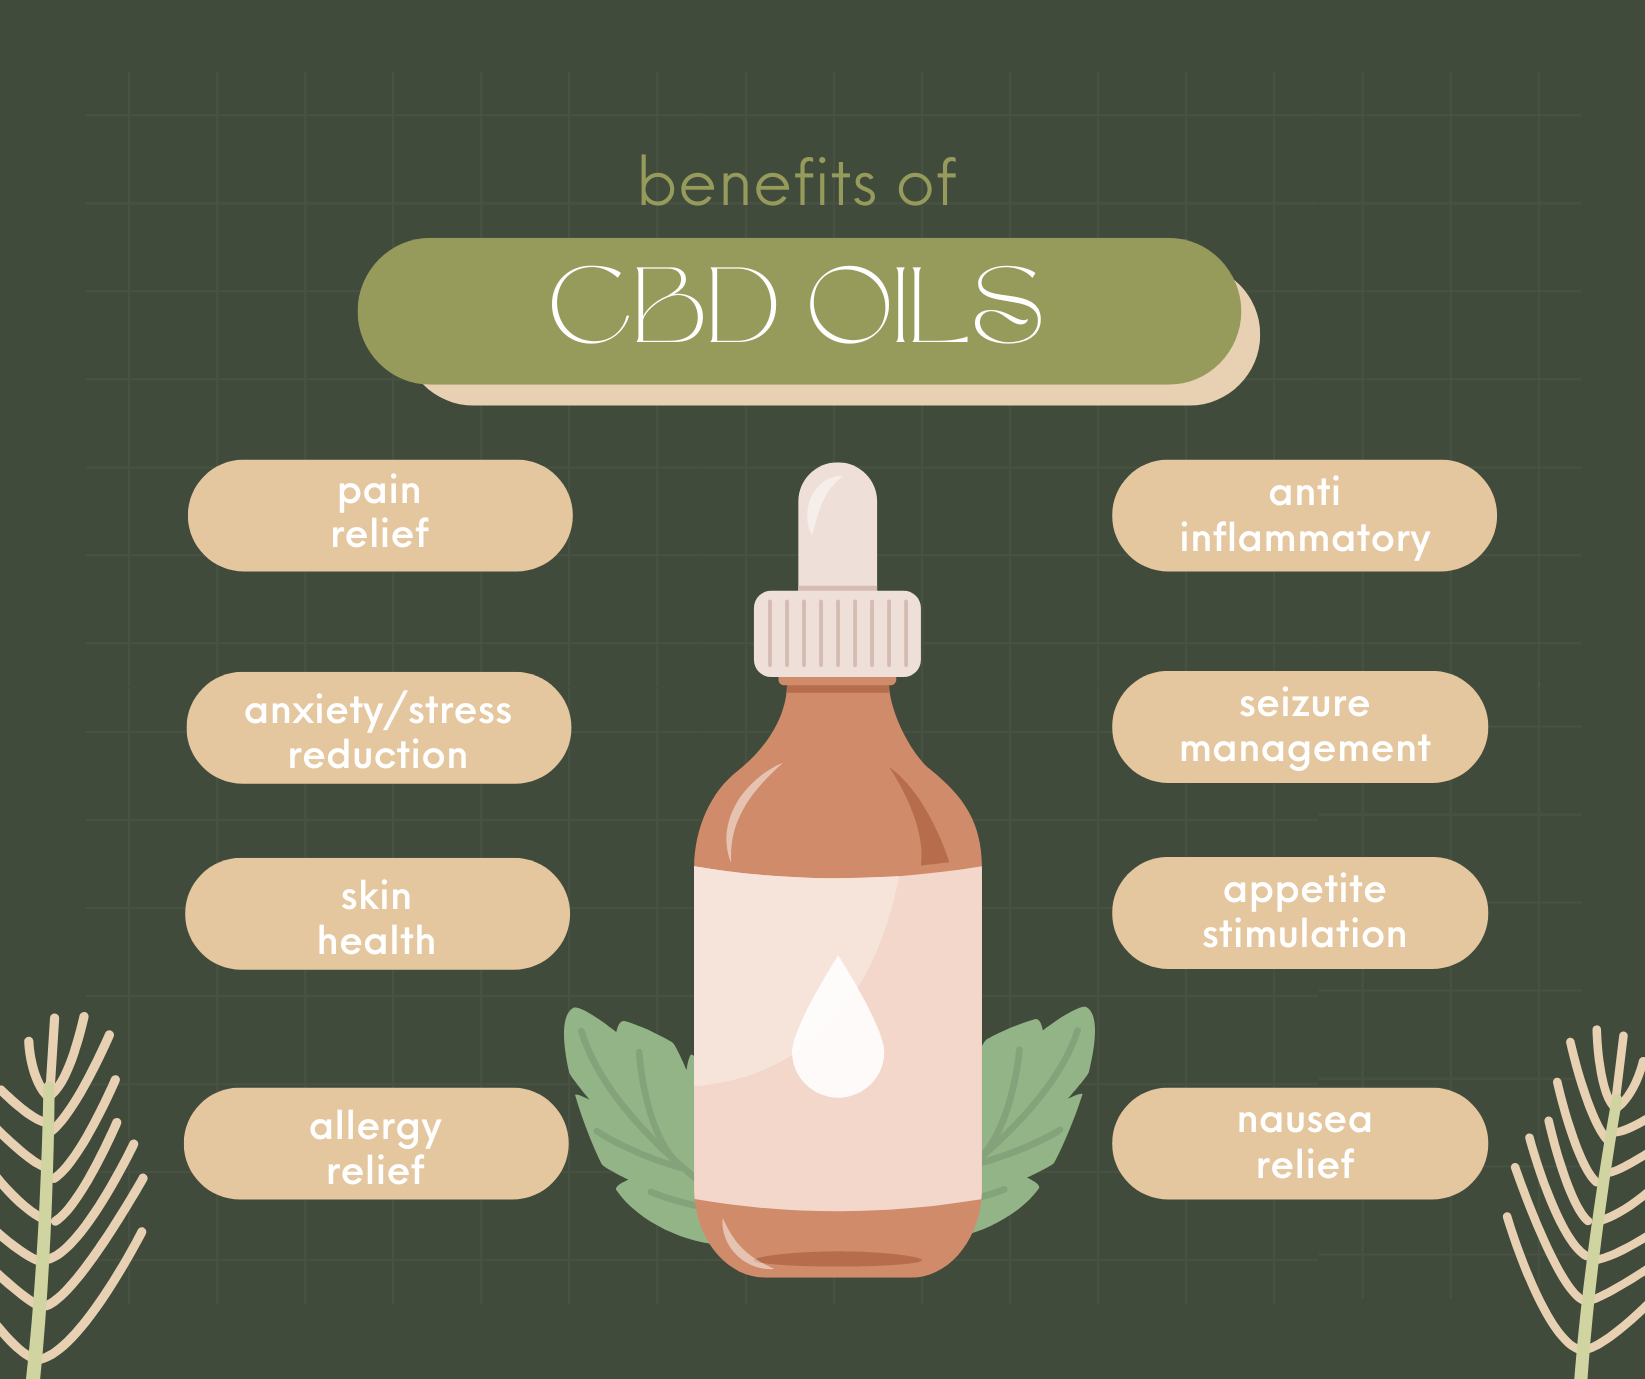 Medium Organic Coconut CBD Oil : Hip & Joints Health / Skin & Coat : 1 oz - 350 mg CBD for dogs and cats